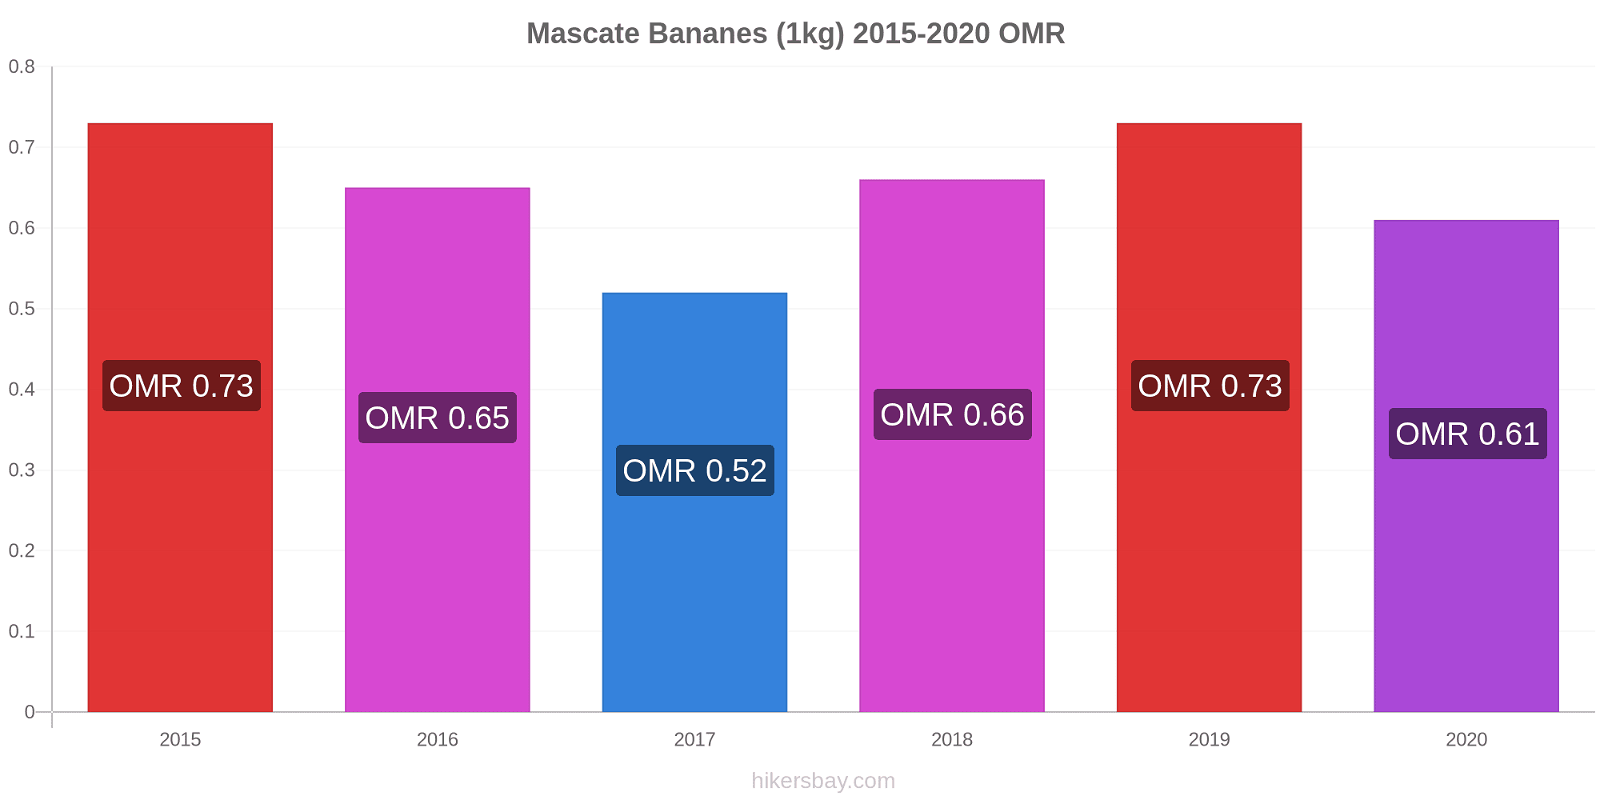 Mascate changements de prix Bananes (1kg) hikersbay.com